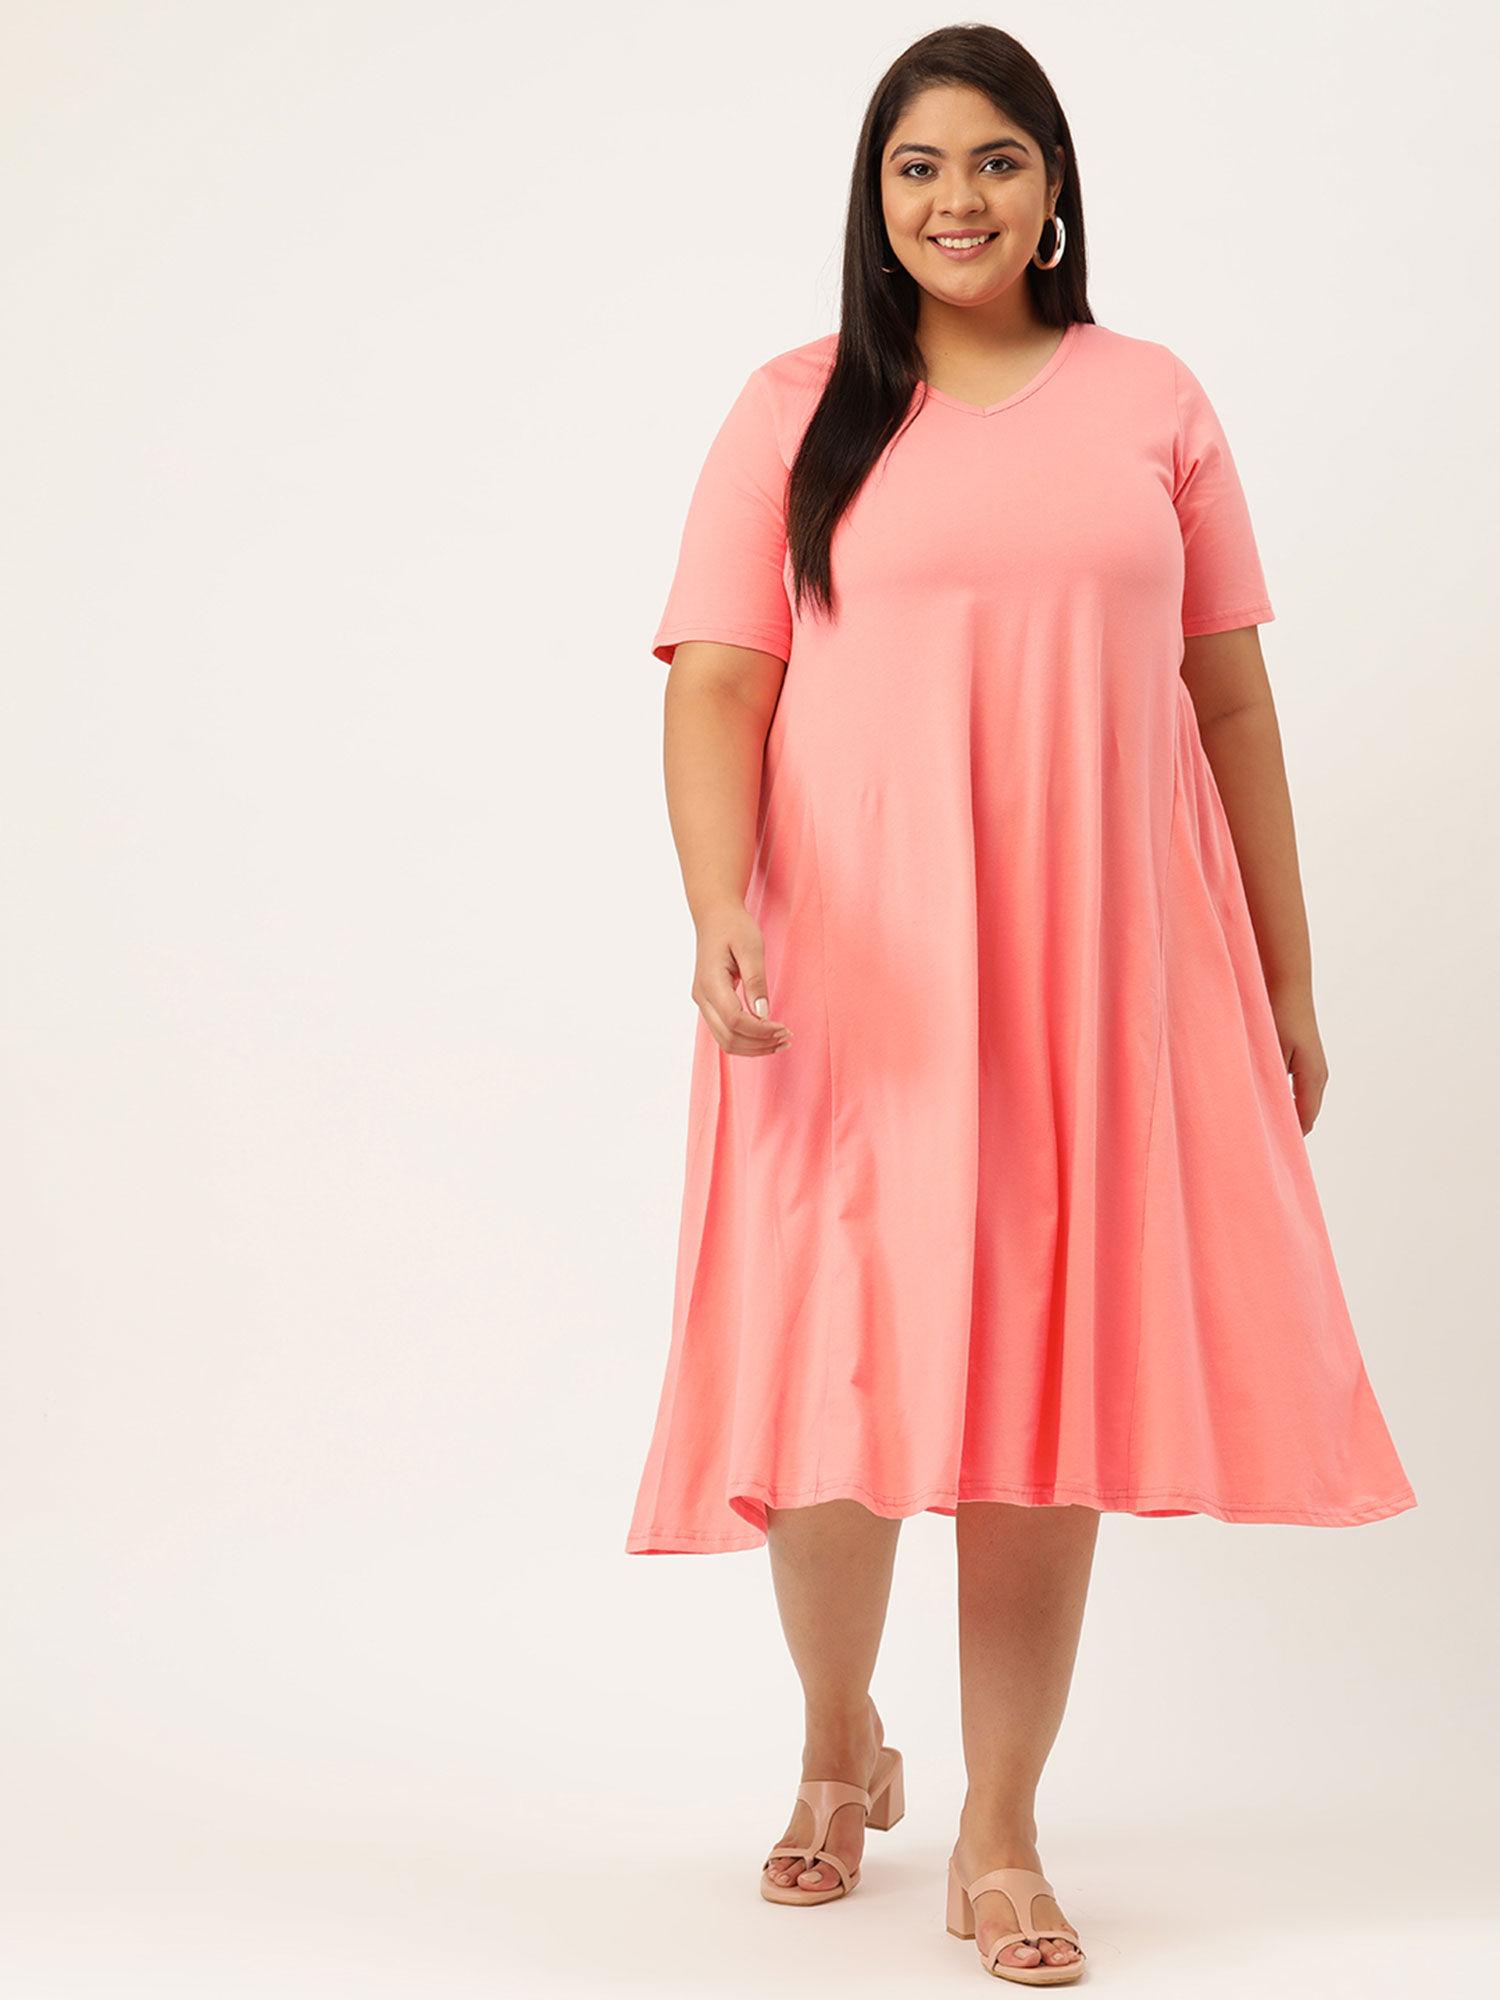 women's dark peach solid color v-neck cotton a-line dress